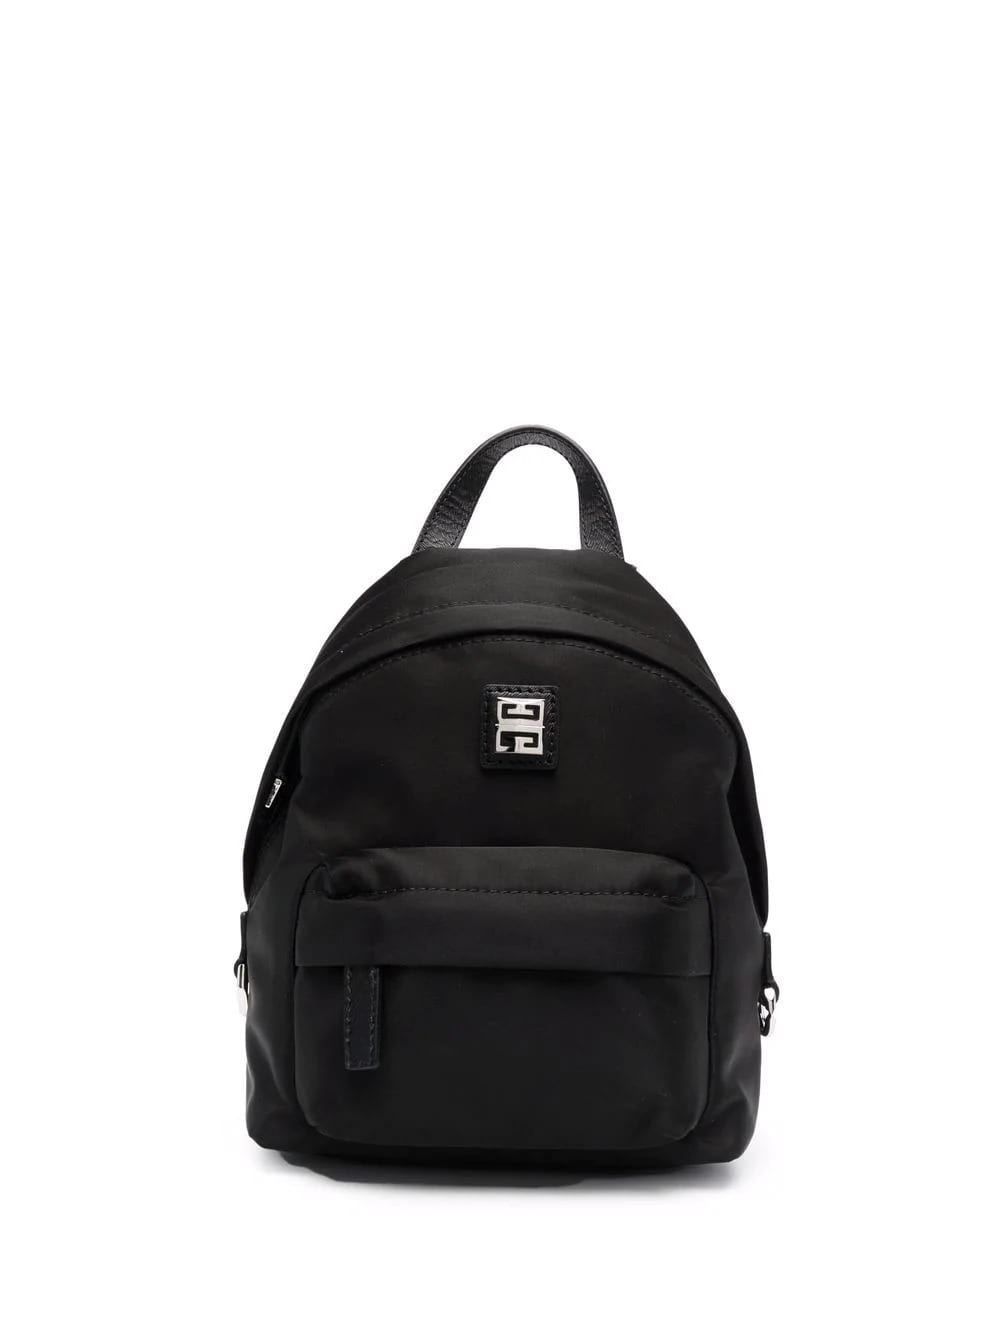 Givenchy Woman Black Mini 4g Light Backpack